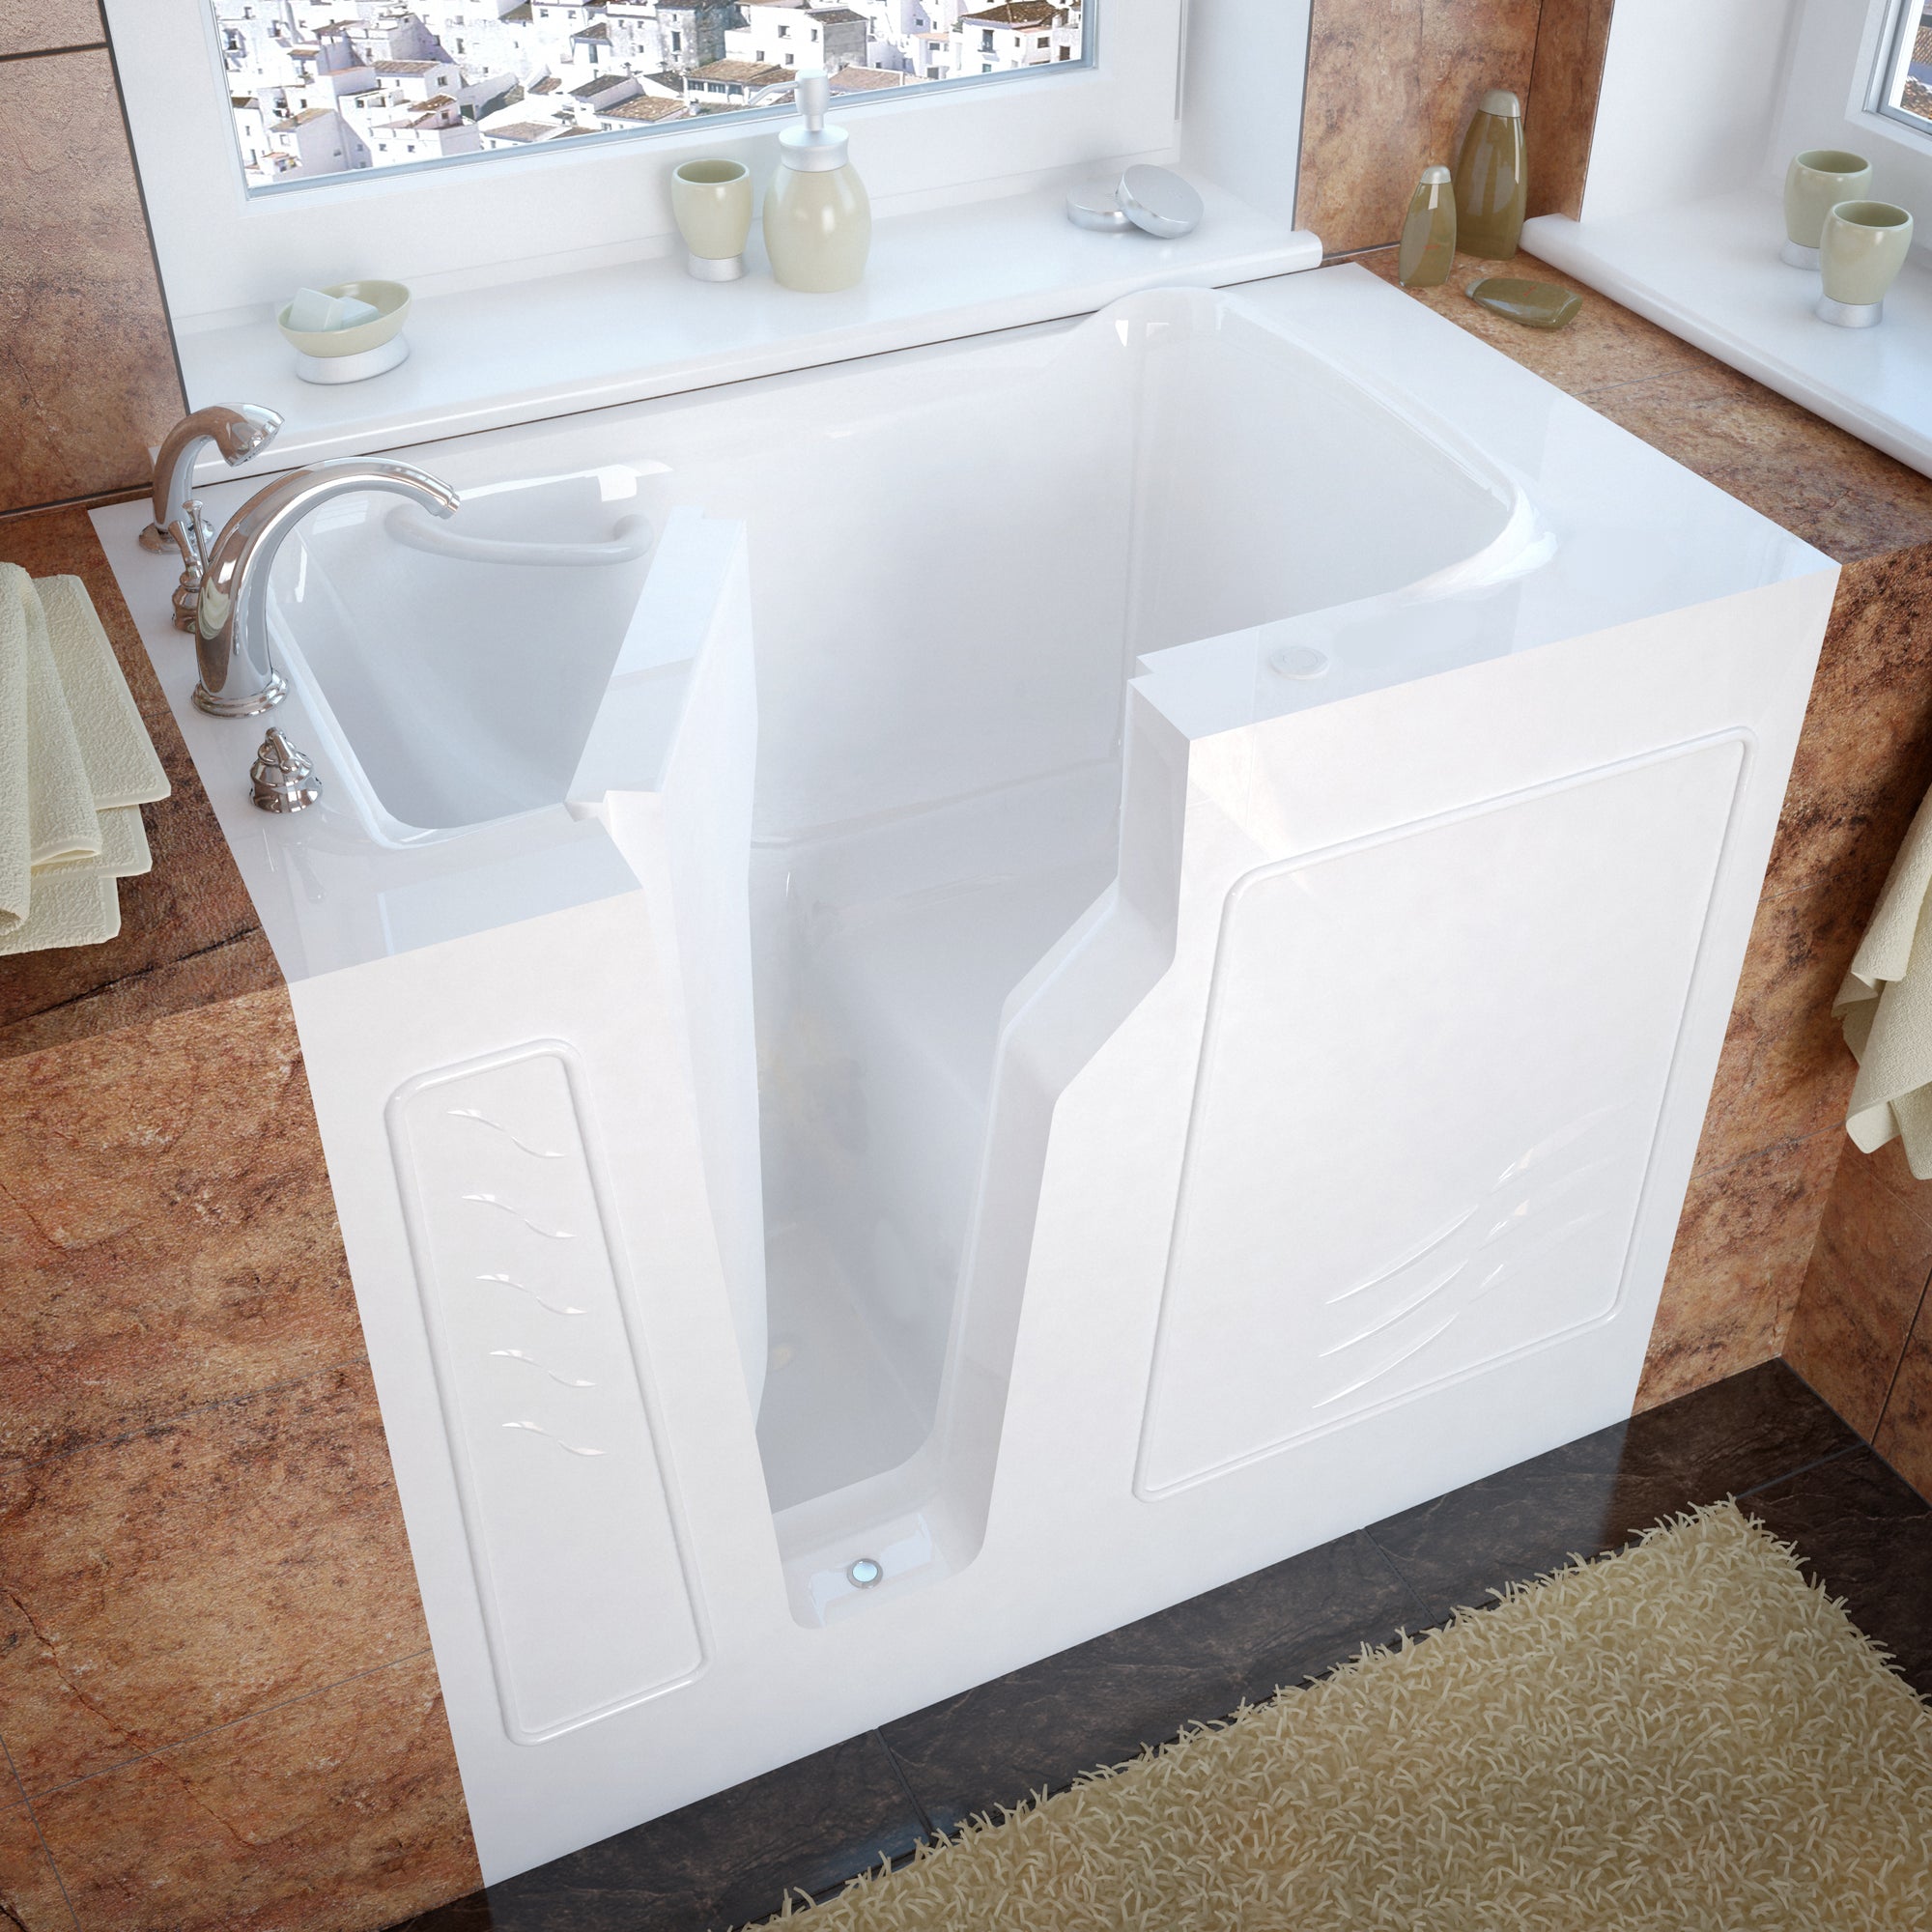 Meditub 26 x 46 Walk-In Bathtub - High grade marine fiberglass with triple gel coating - White Finish - Inward swinging door - with 6 in. Threshold & 17 in. Seat Height, Built-in grab bar - Left Drain - Soaking  - Lifestyle -  2646 - Vital Hydrotherapy